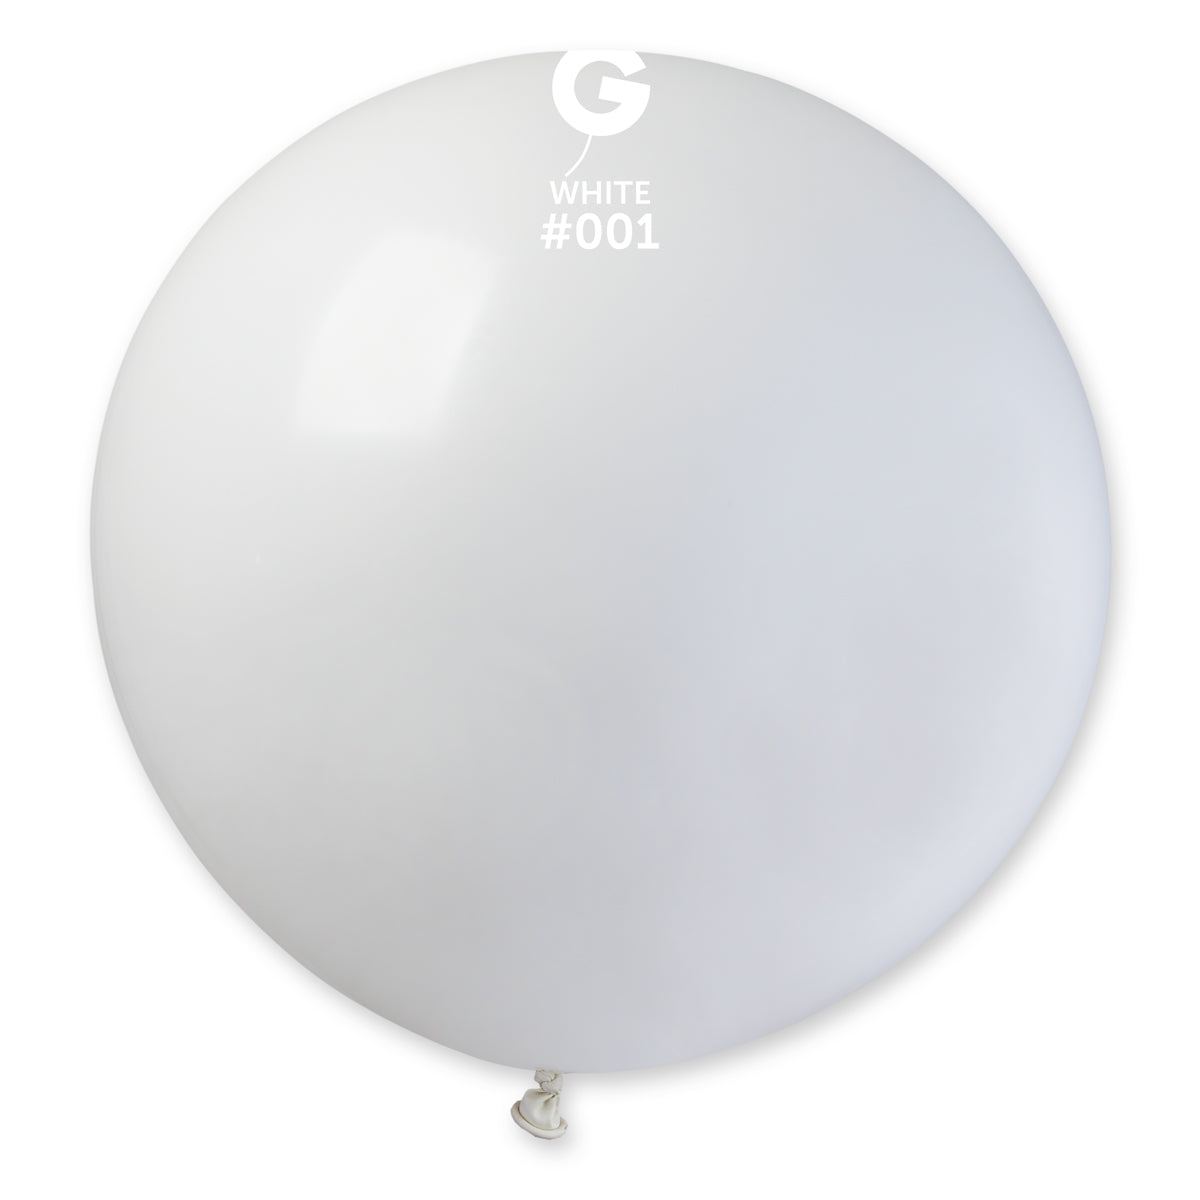 1 Count White Latex Balloon 30"